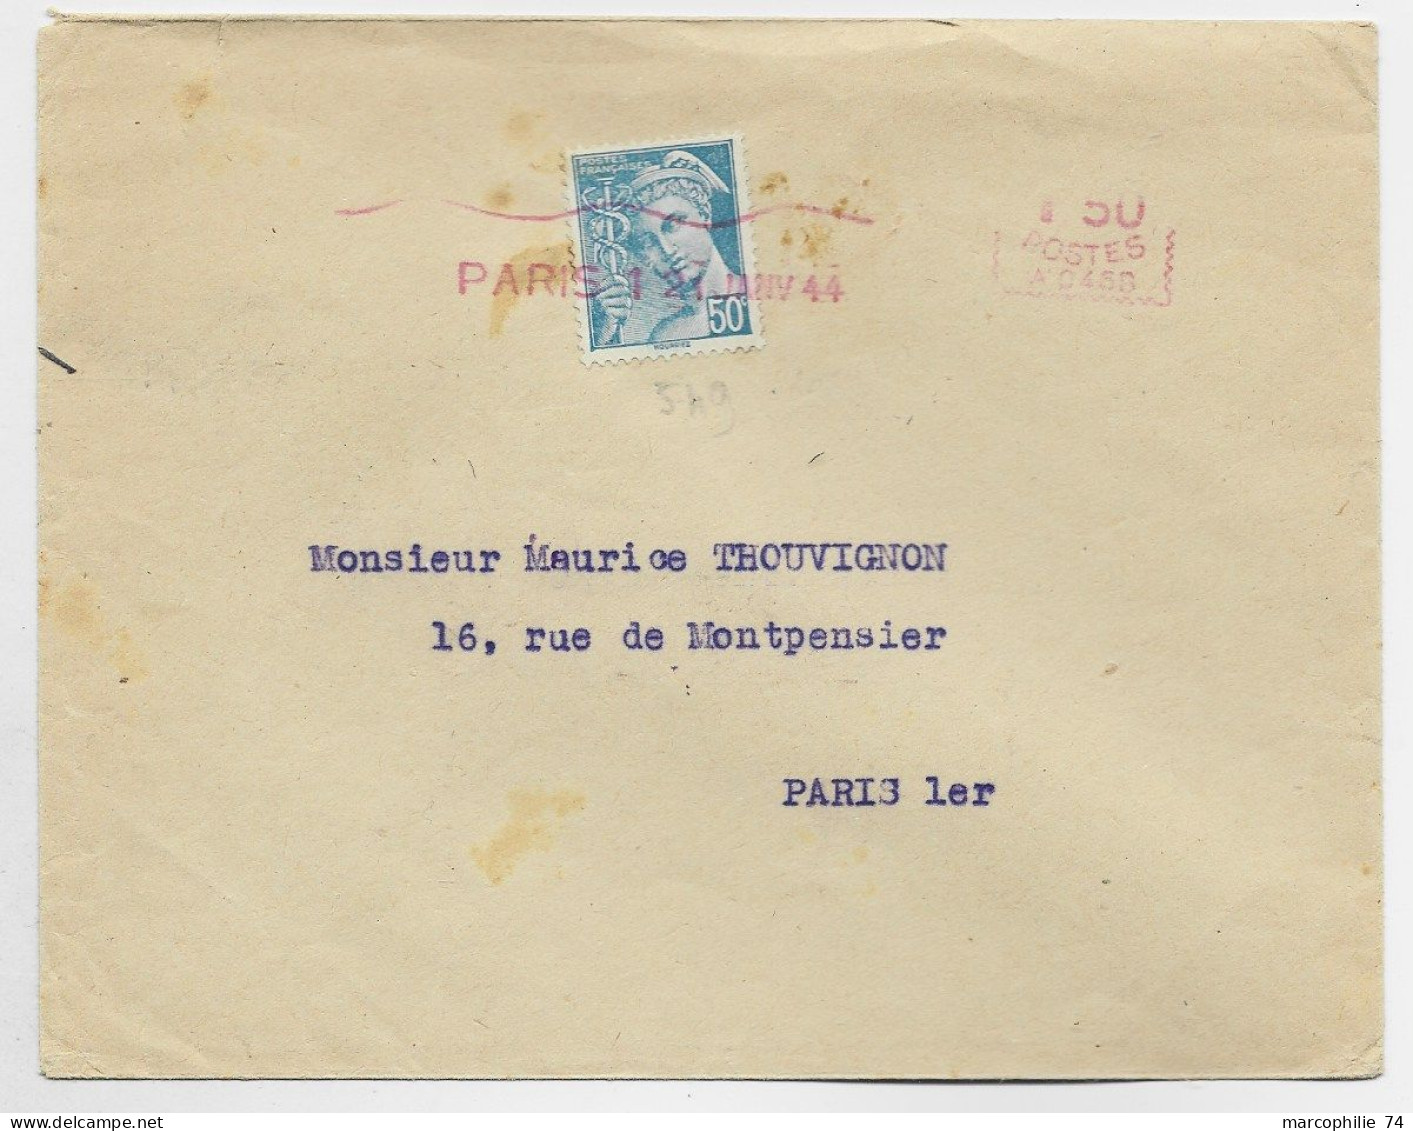 FRANCE MERCURE 50C N°549 OBL EMA 1FR50 A 456 PARIS 1 21 JANV 1944 AU TARIF - 1938-42 Mercurio